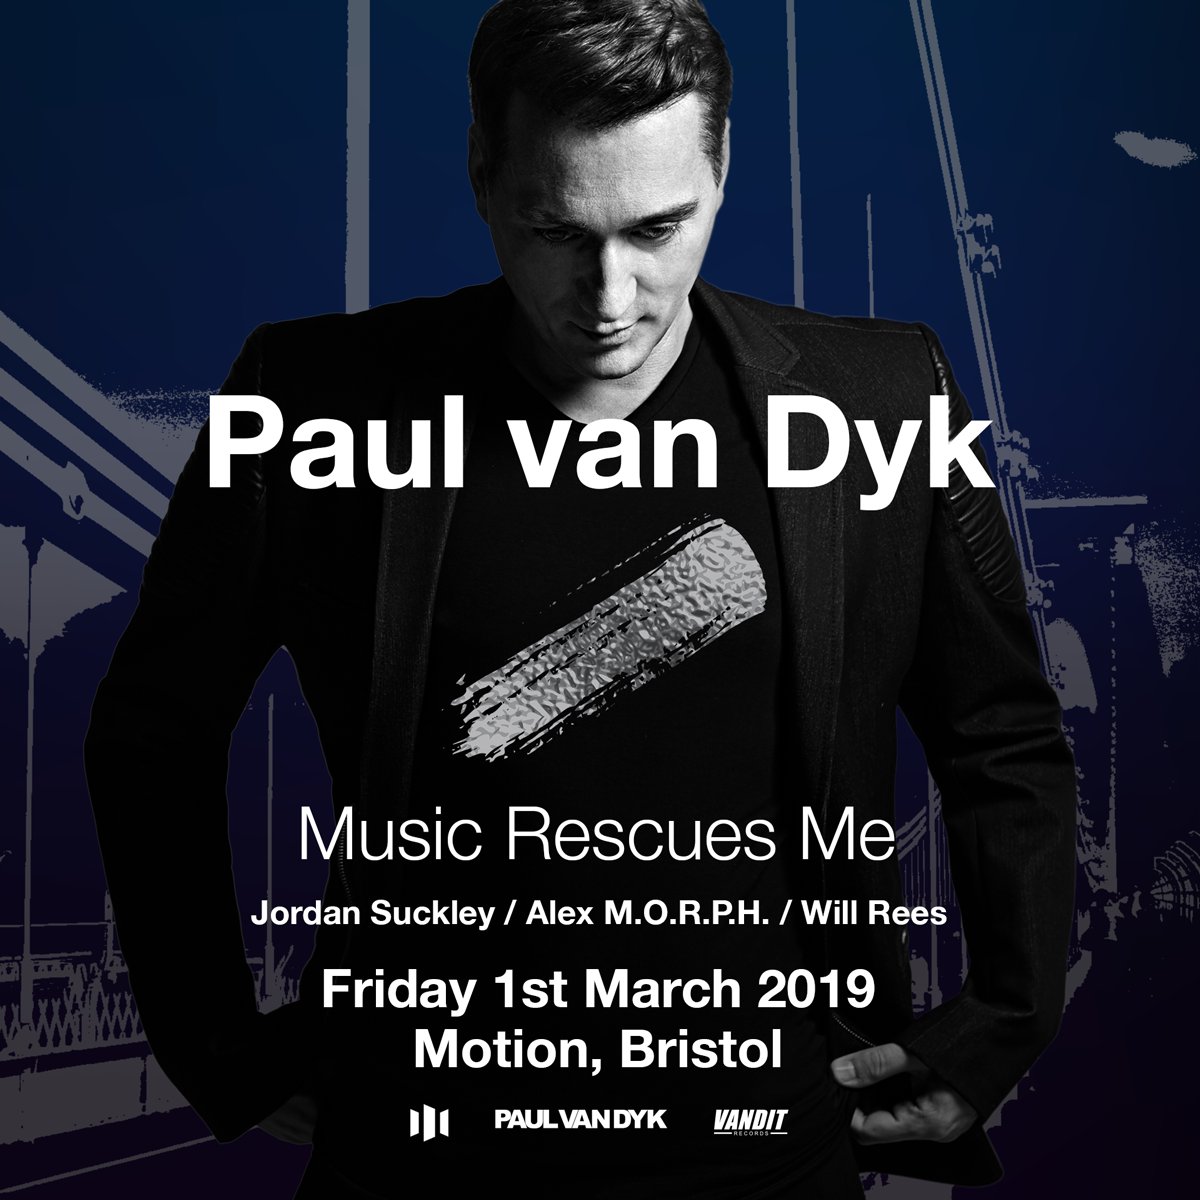 #MusicRescuesMe  March 1st at @MotionBristol  Pre sale tickets go live Monday 10am  moti.onl/pvdbristol https://t.co/VszGZbcrqS